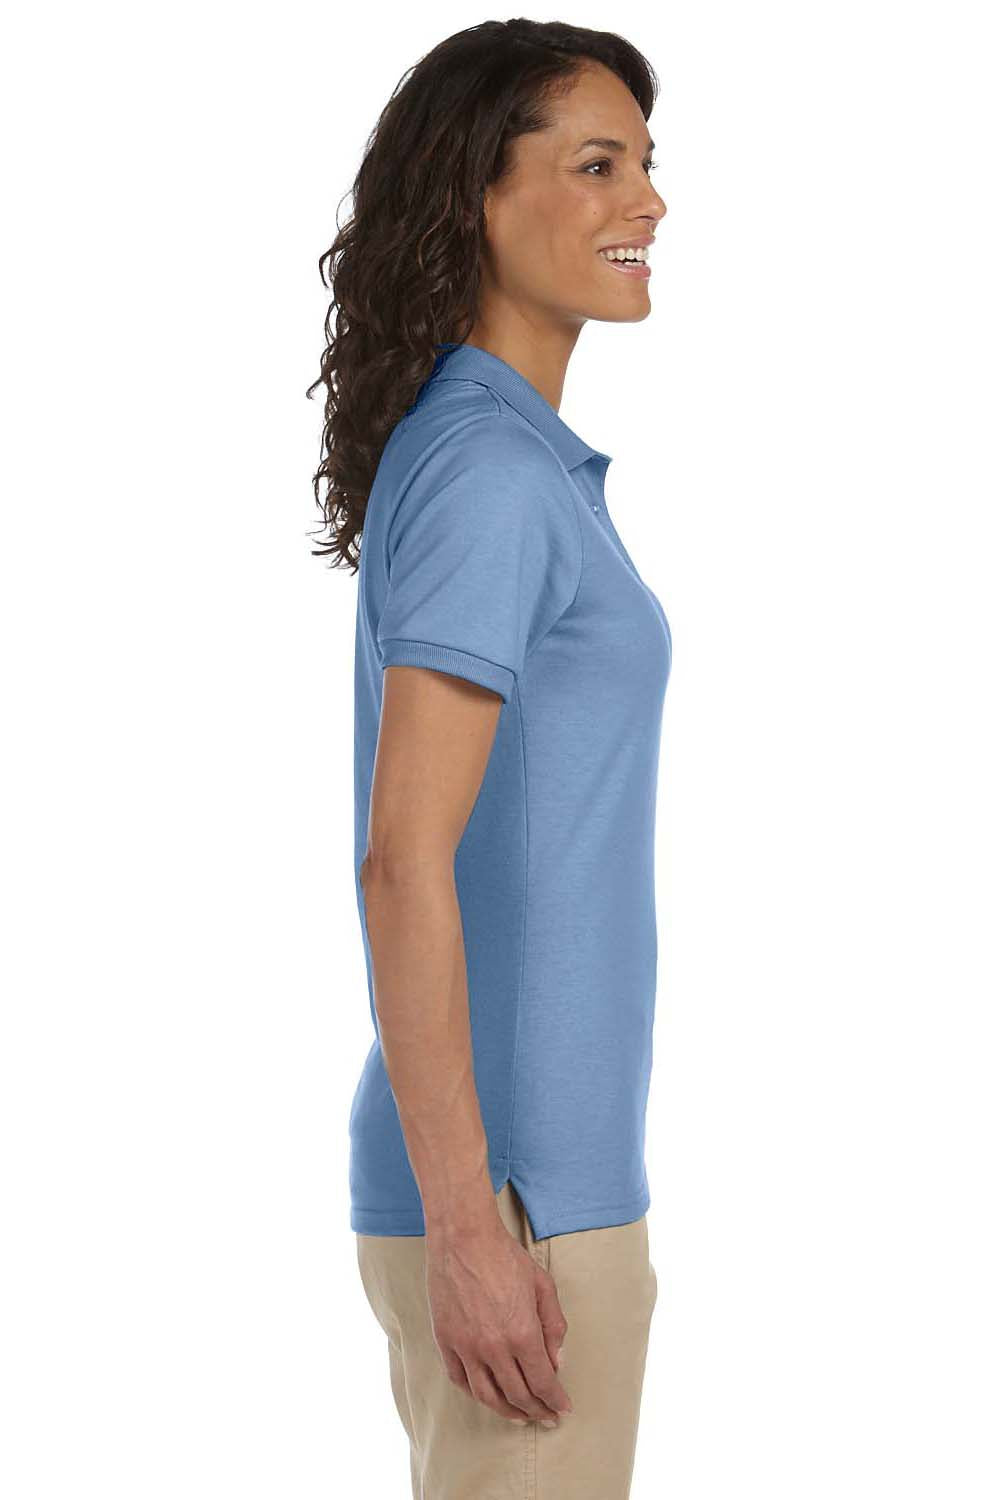 Jerzees 437W Womens SpotShield Stain Resistant Short Sleeve Polo Shirt Light Blue Side